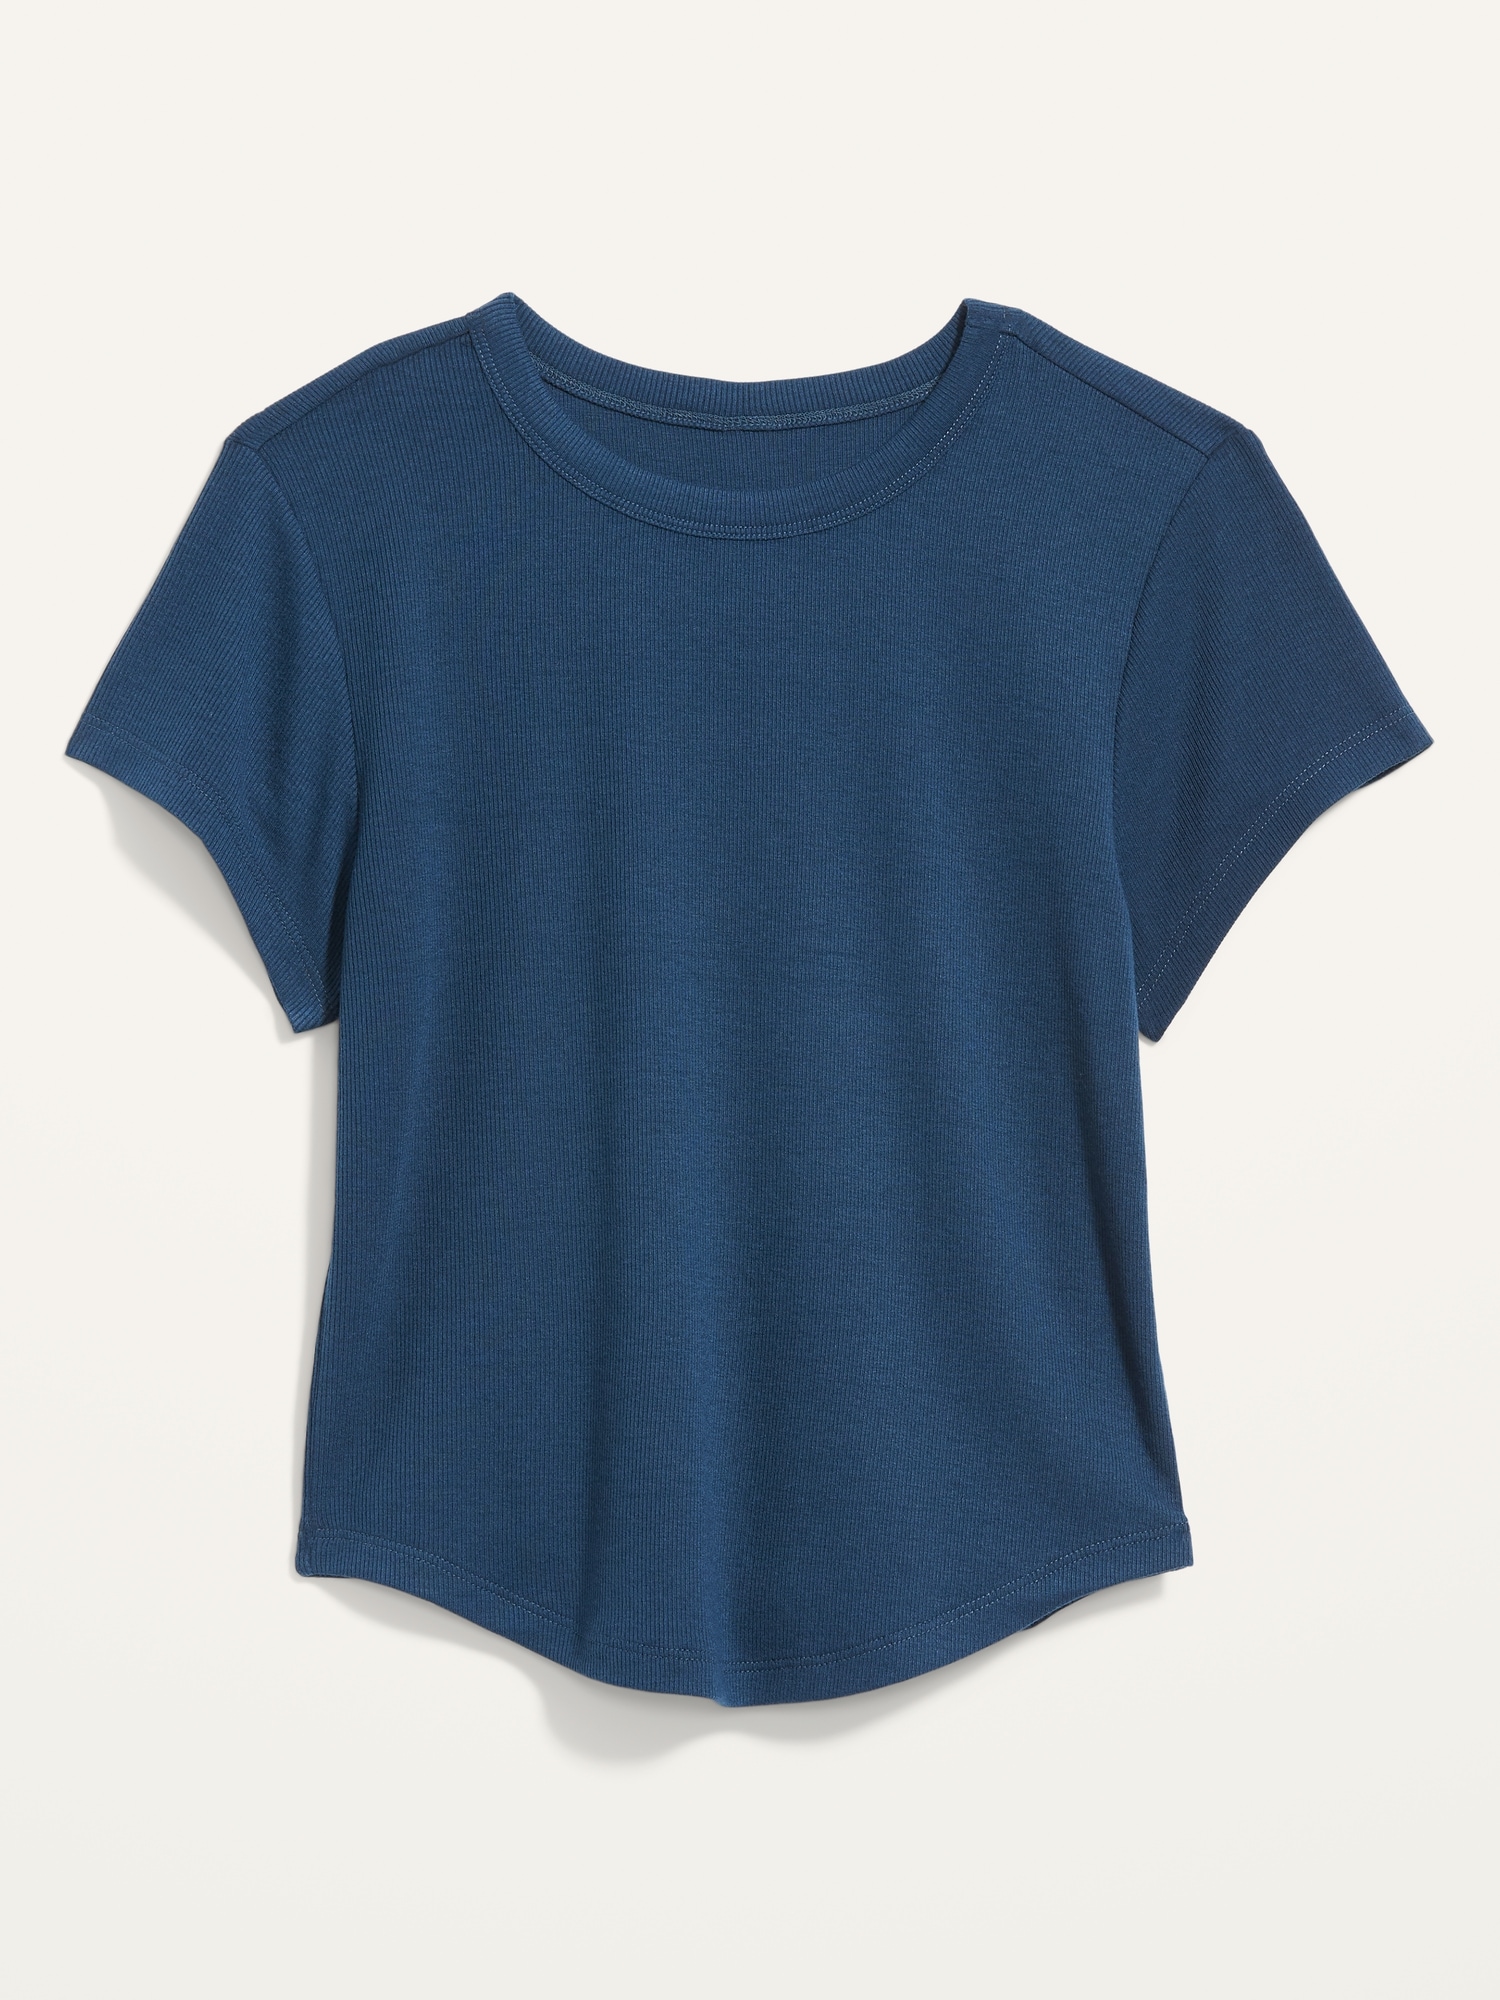 Short-Sleeve UltraLite Rib Cropped T-Shirt for Women | Old Navy